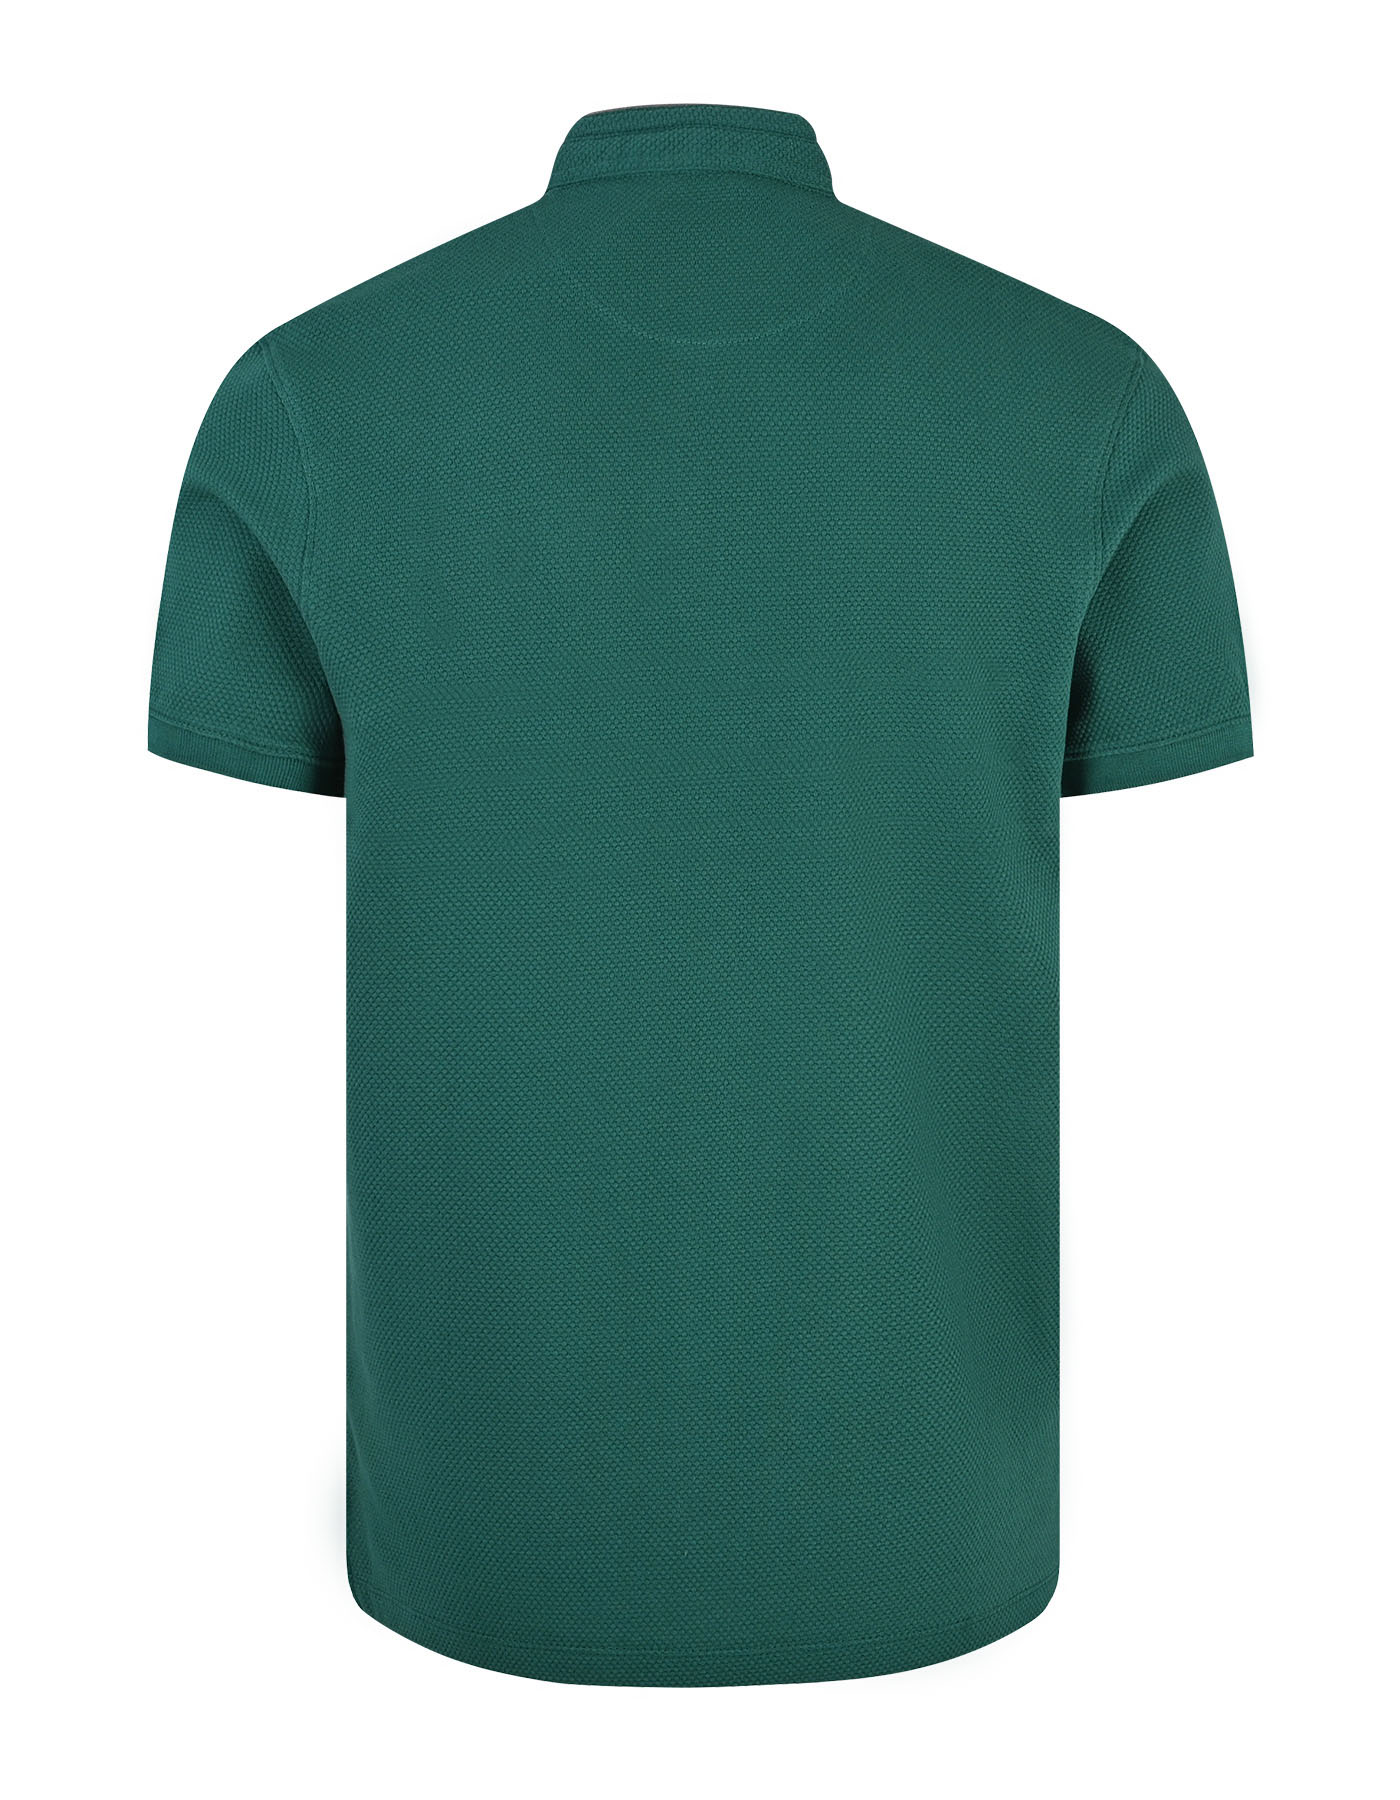 Green Texture Band Collar Cotton T Shirt For Men|Uniworth